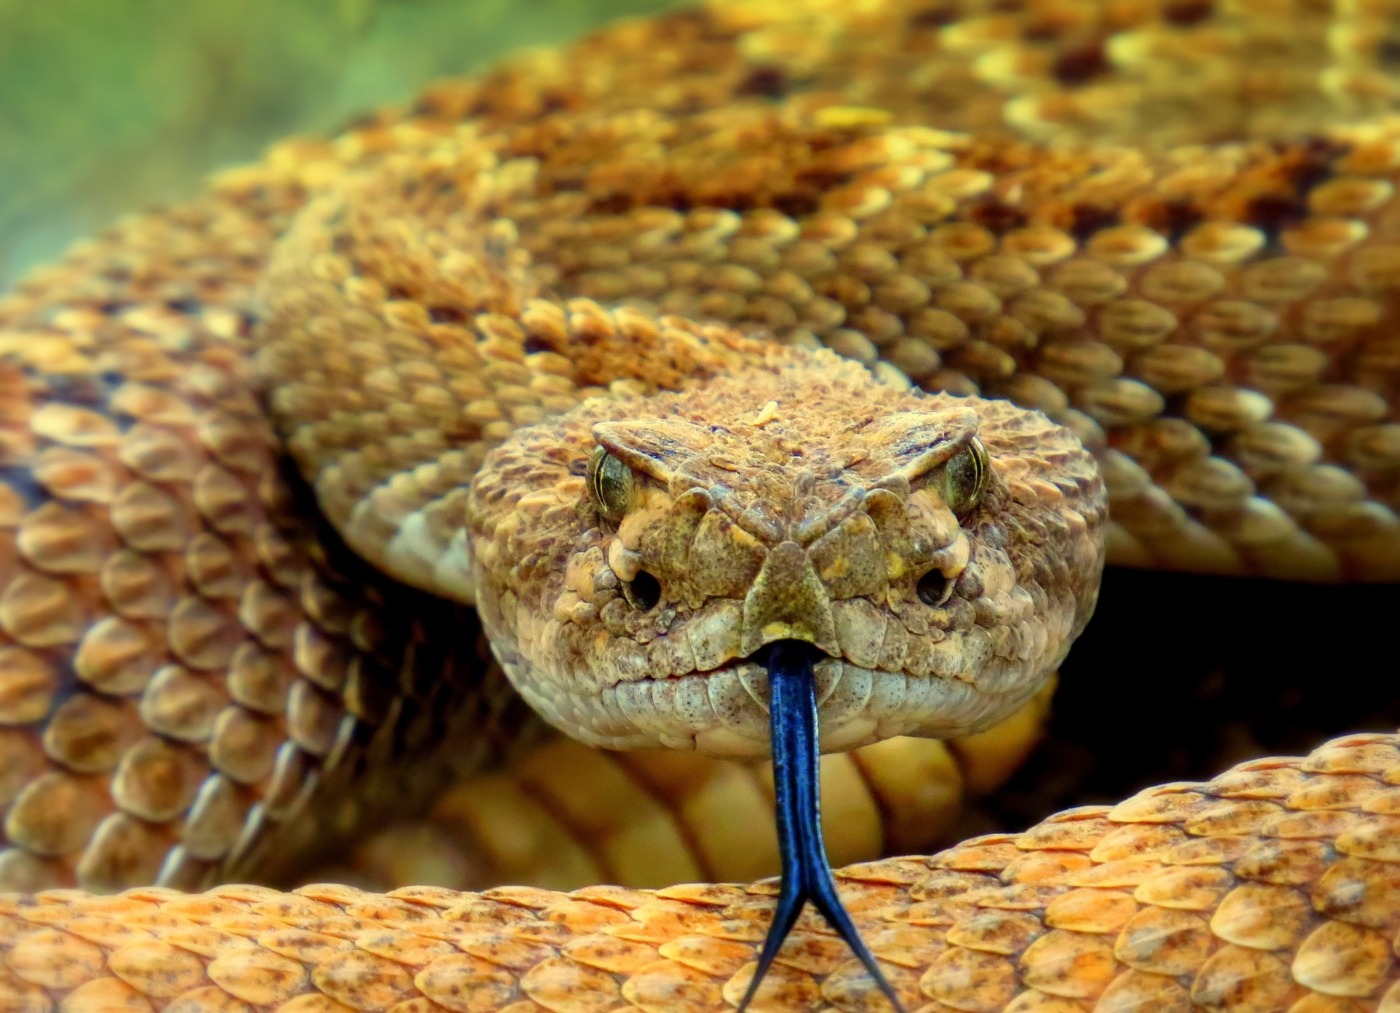 snake fangs close up